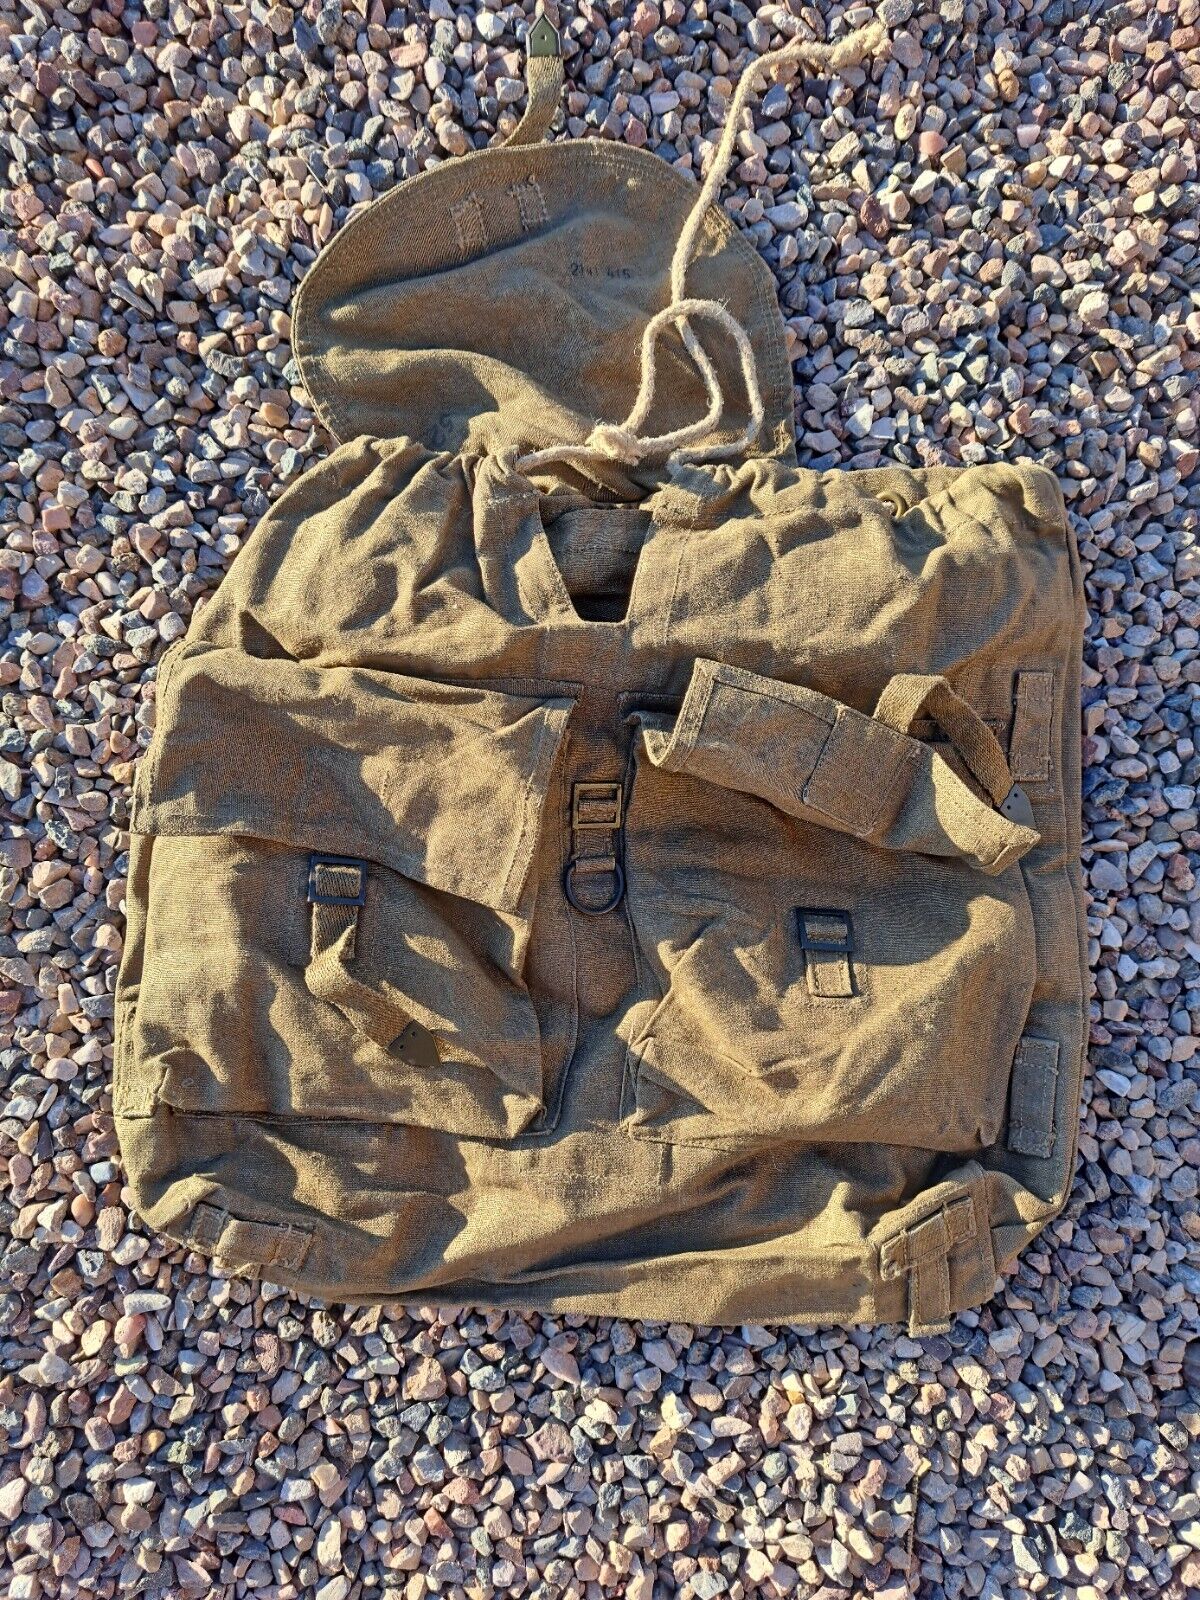 Original Czech Army Vintage Rucksack With Y Straps Suspenders M60 NOS.